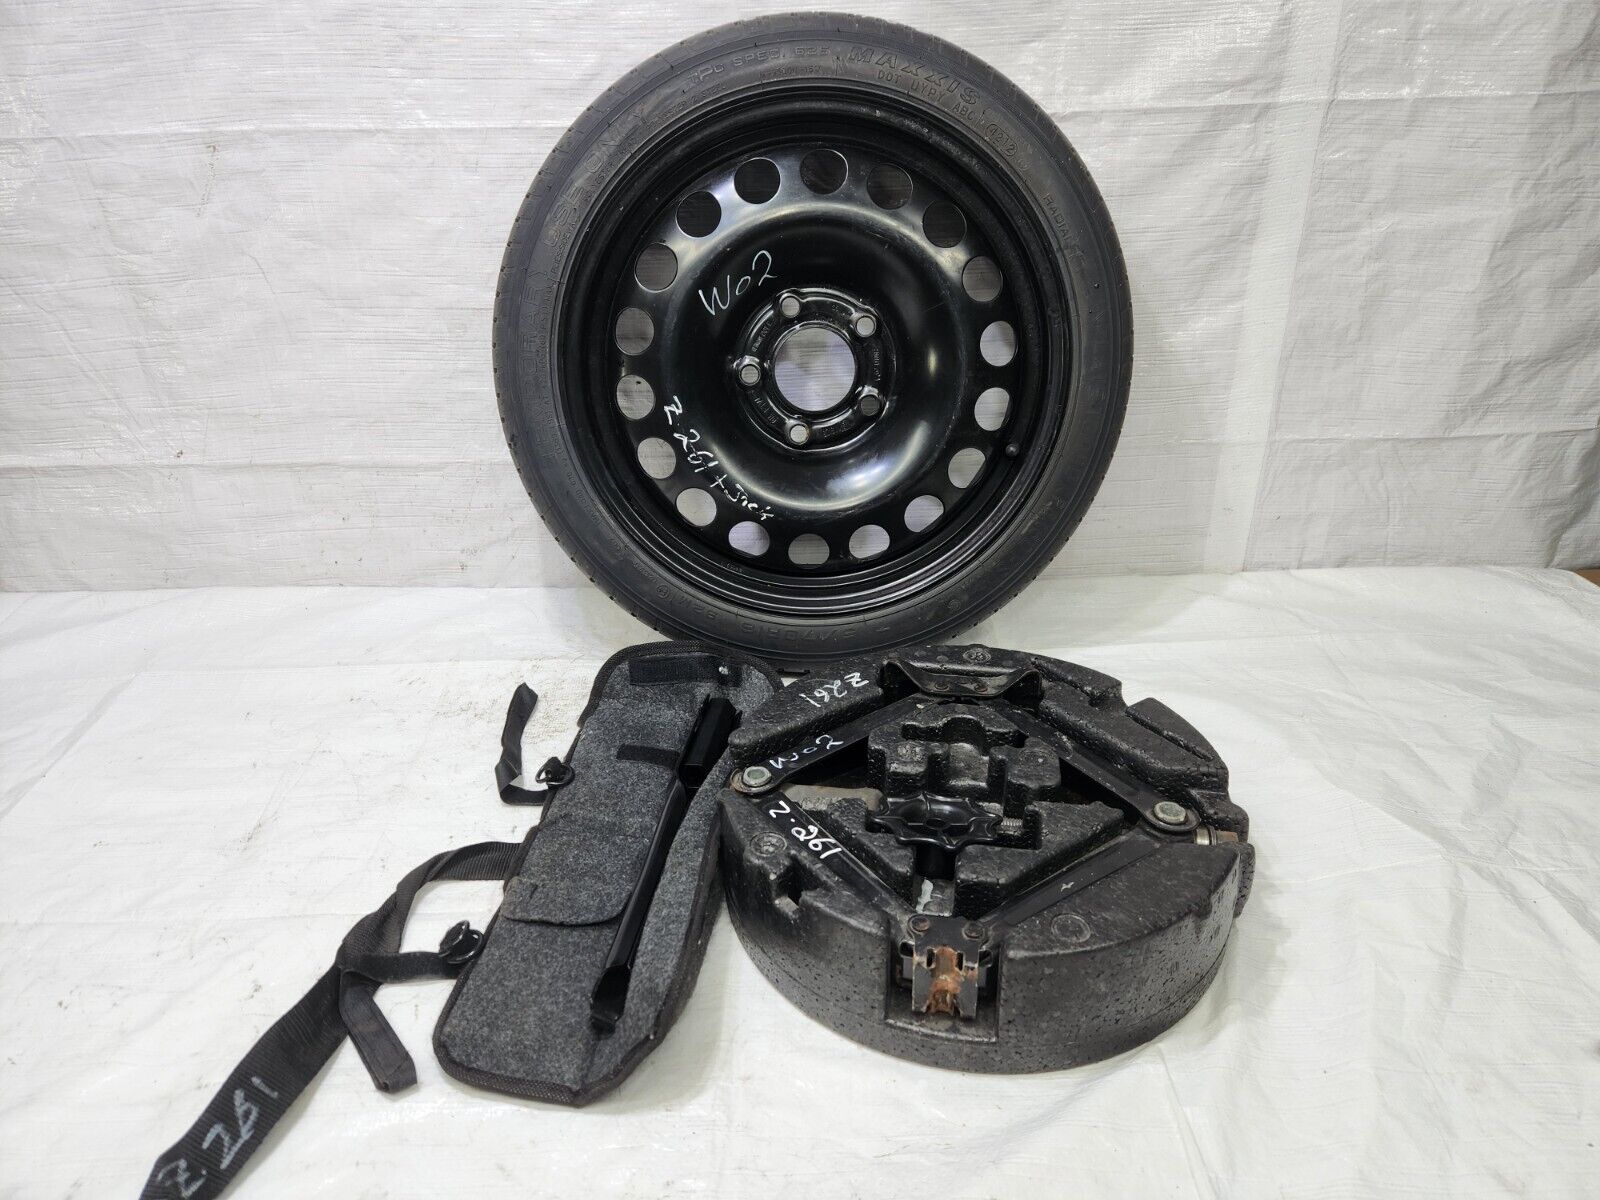 2017 Buick Verano Spare Tire Wheel Rim with Jack Tool Kit OEM T115/70R16